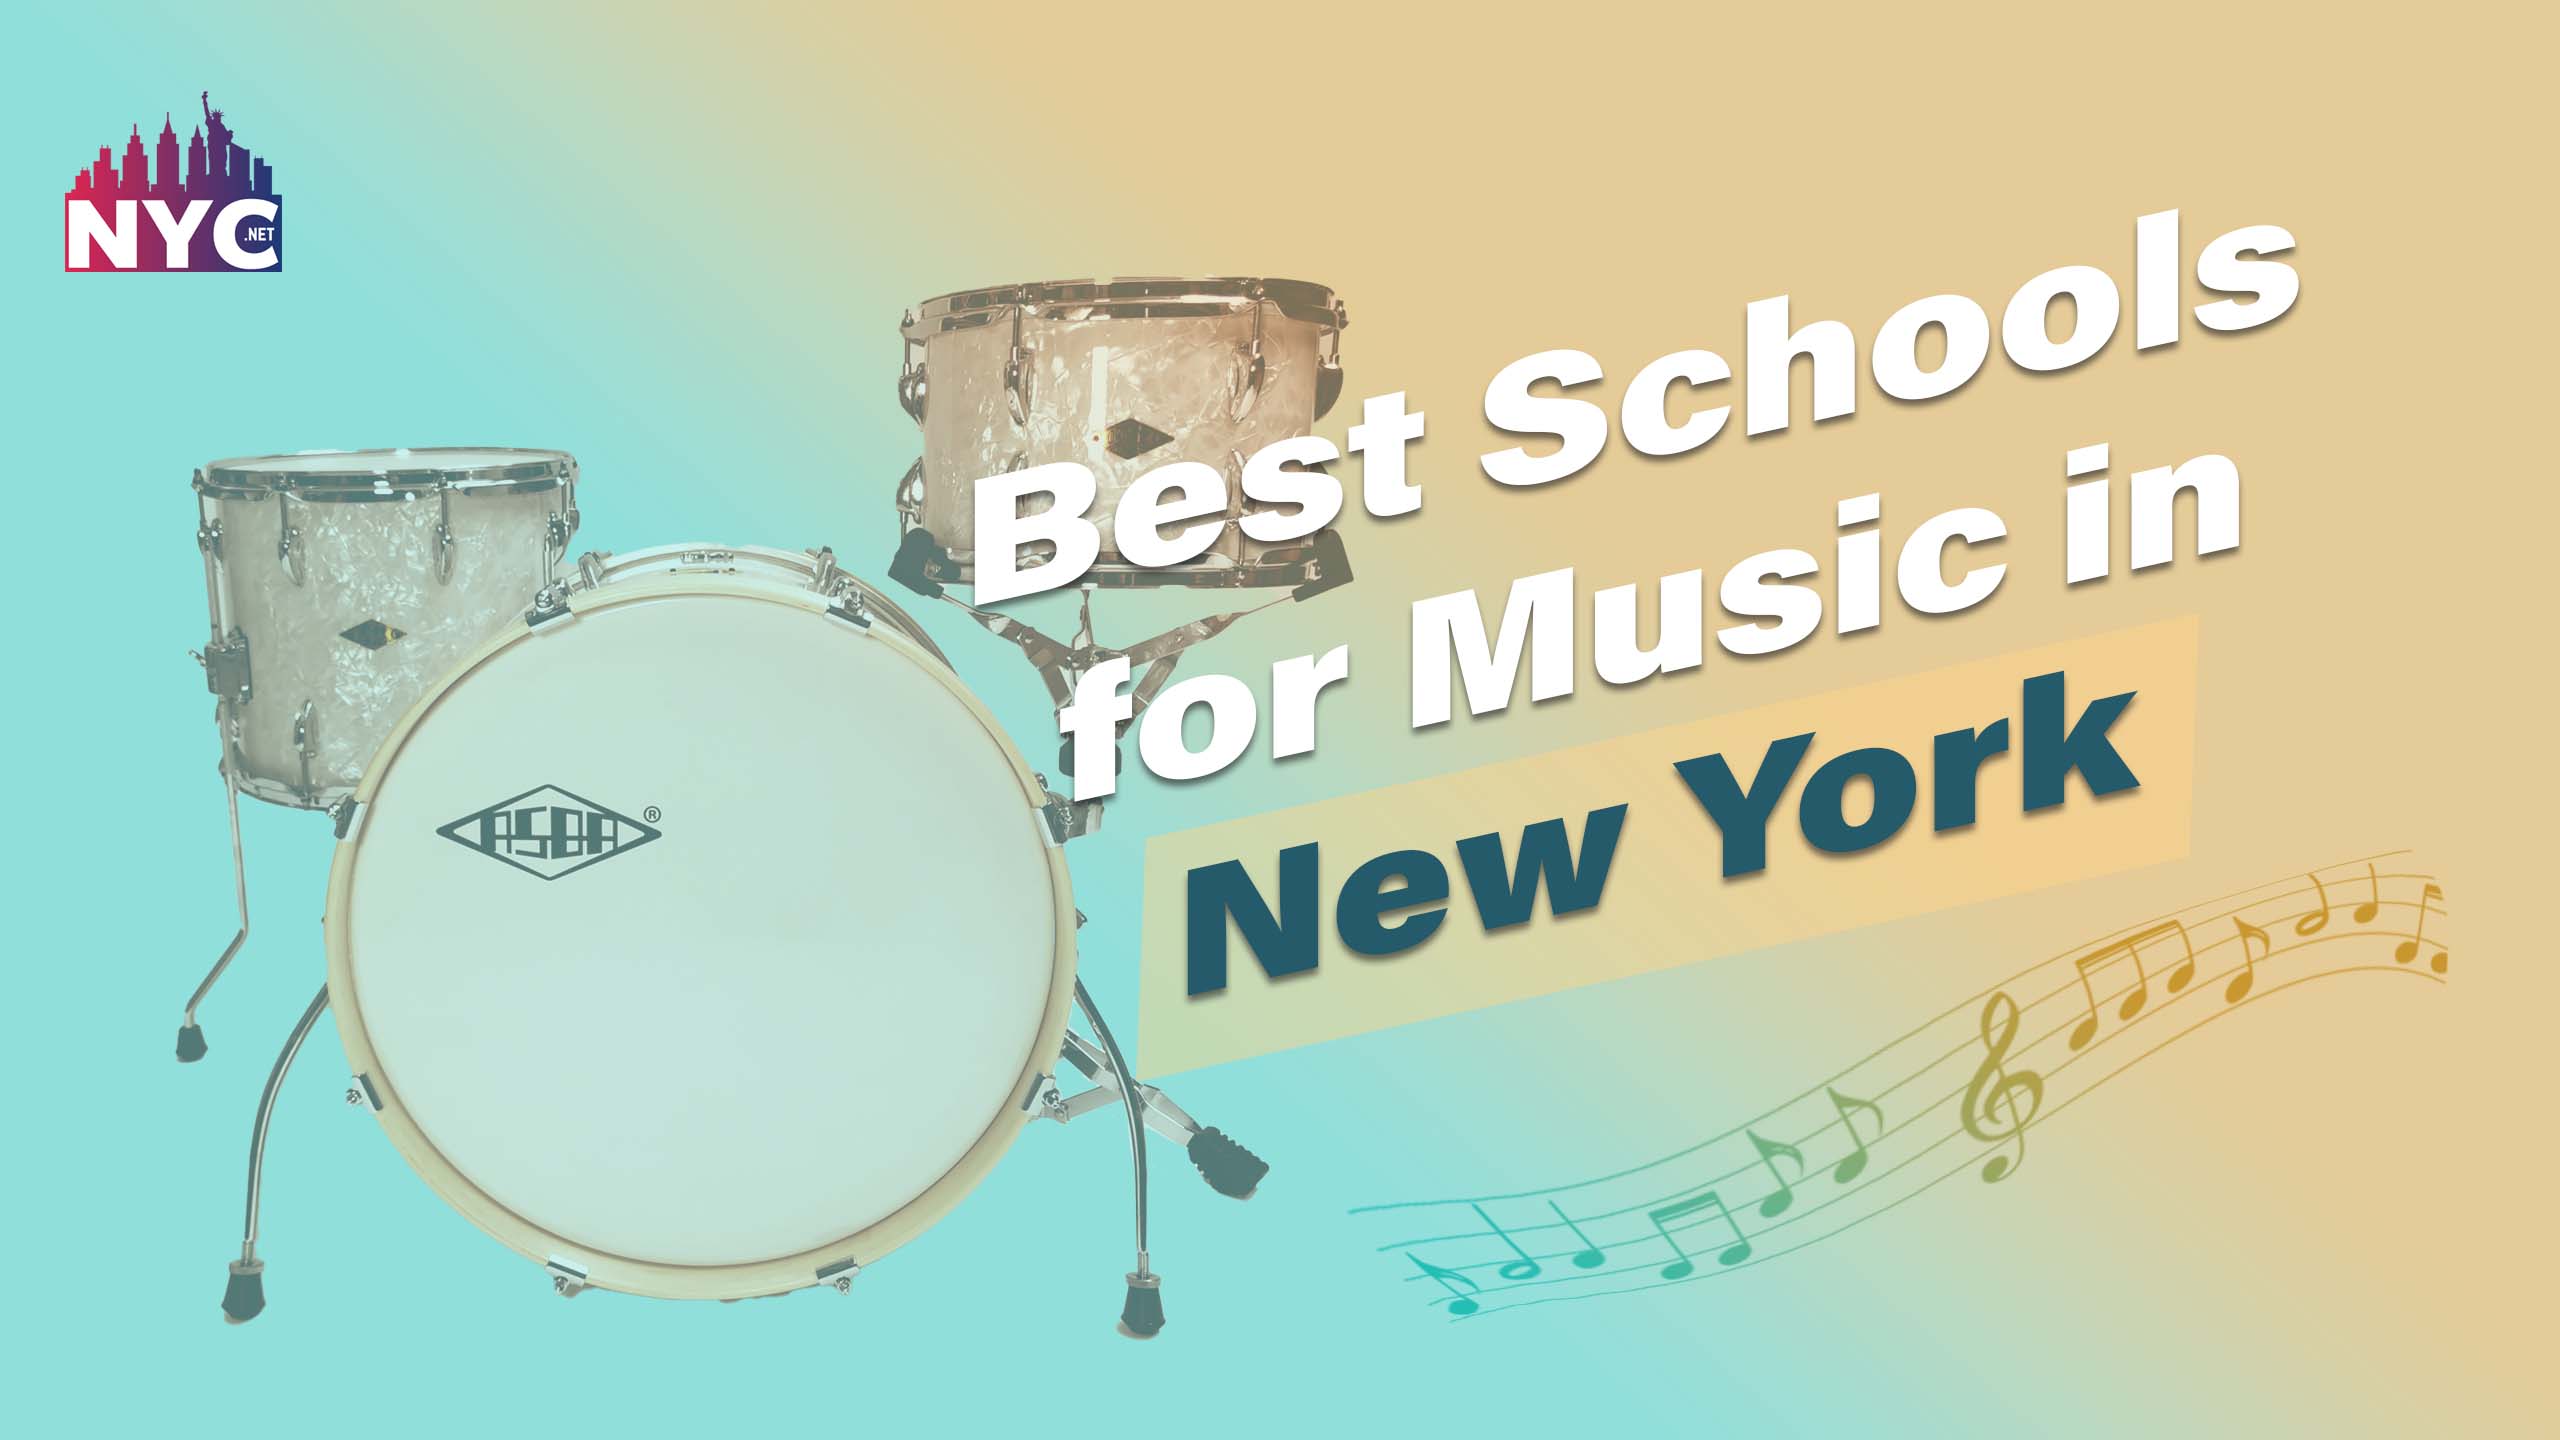 best schools for music